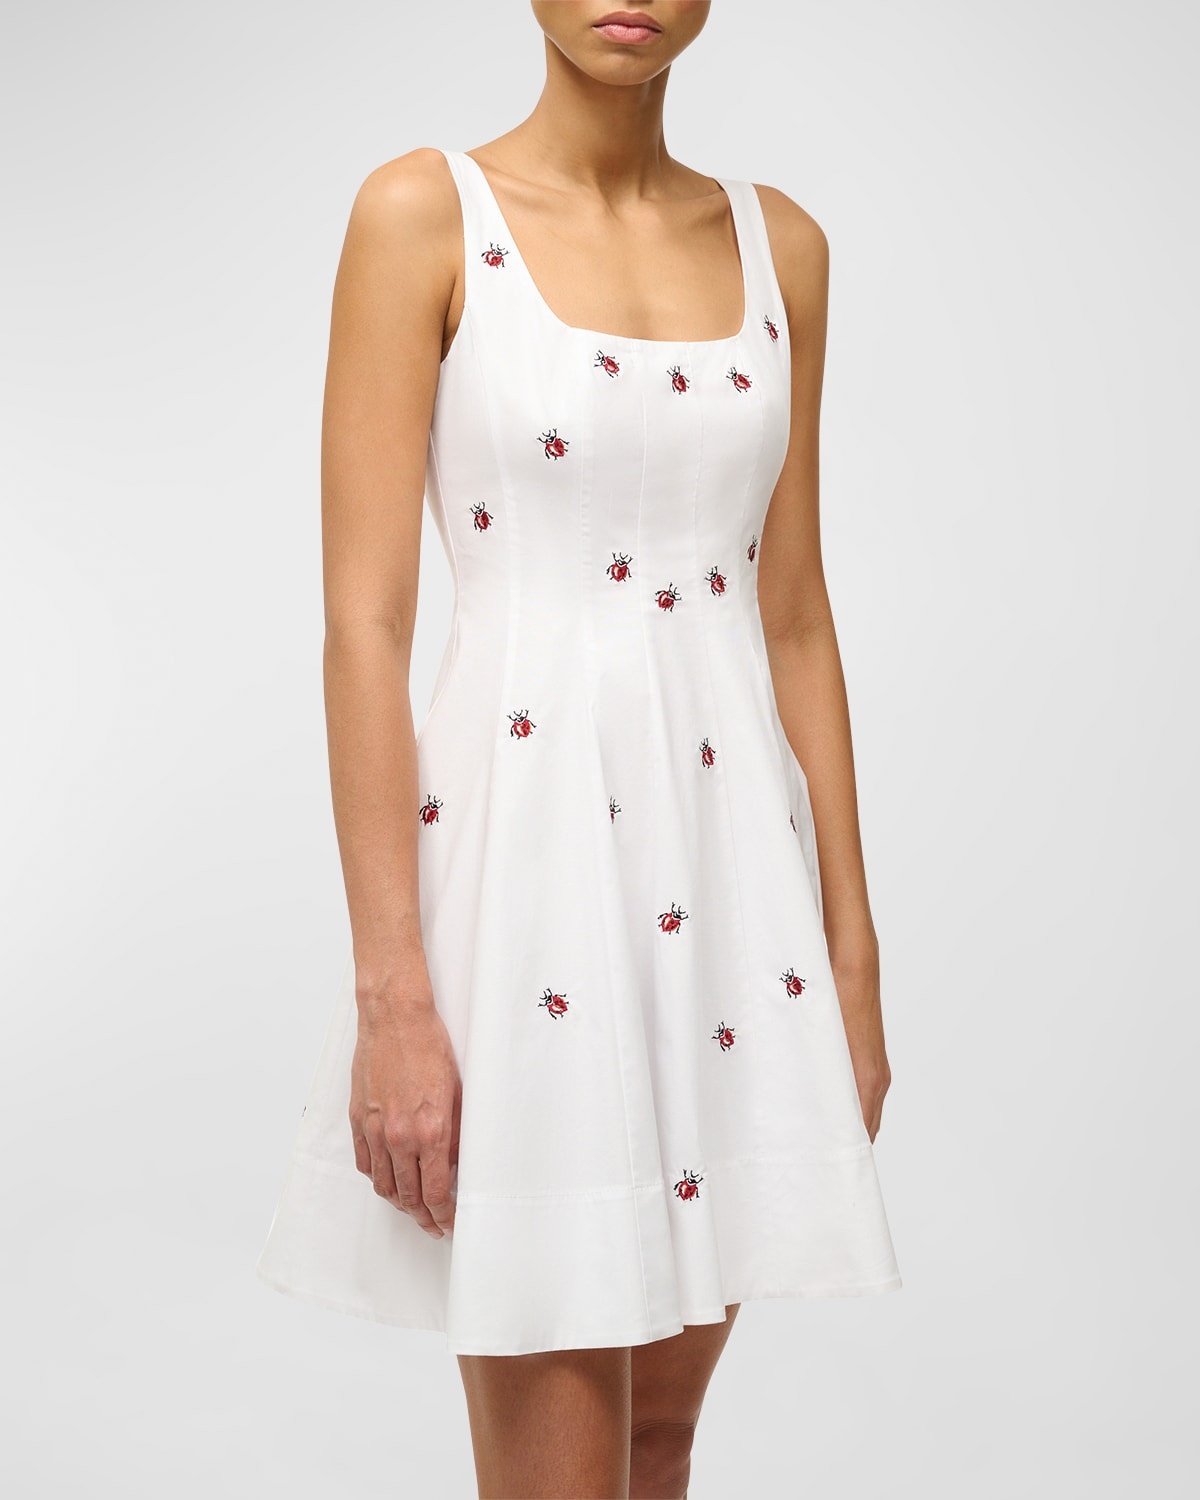 Wells Ladybug Print Cotton Poplin Sleeveless Mini Dress - 2